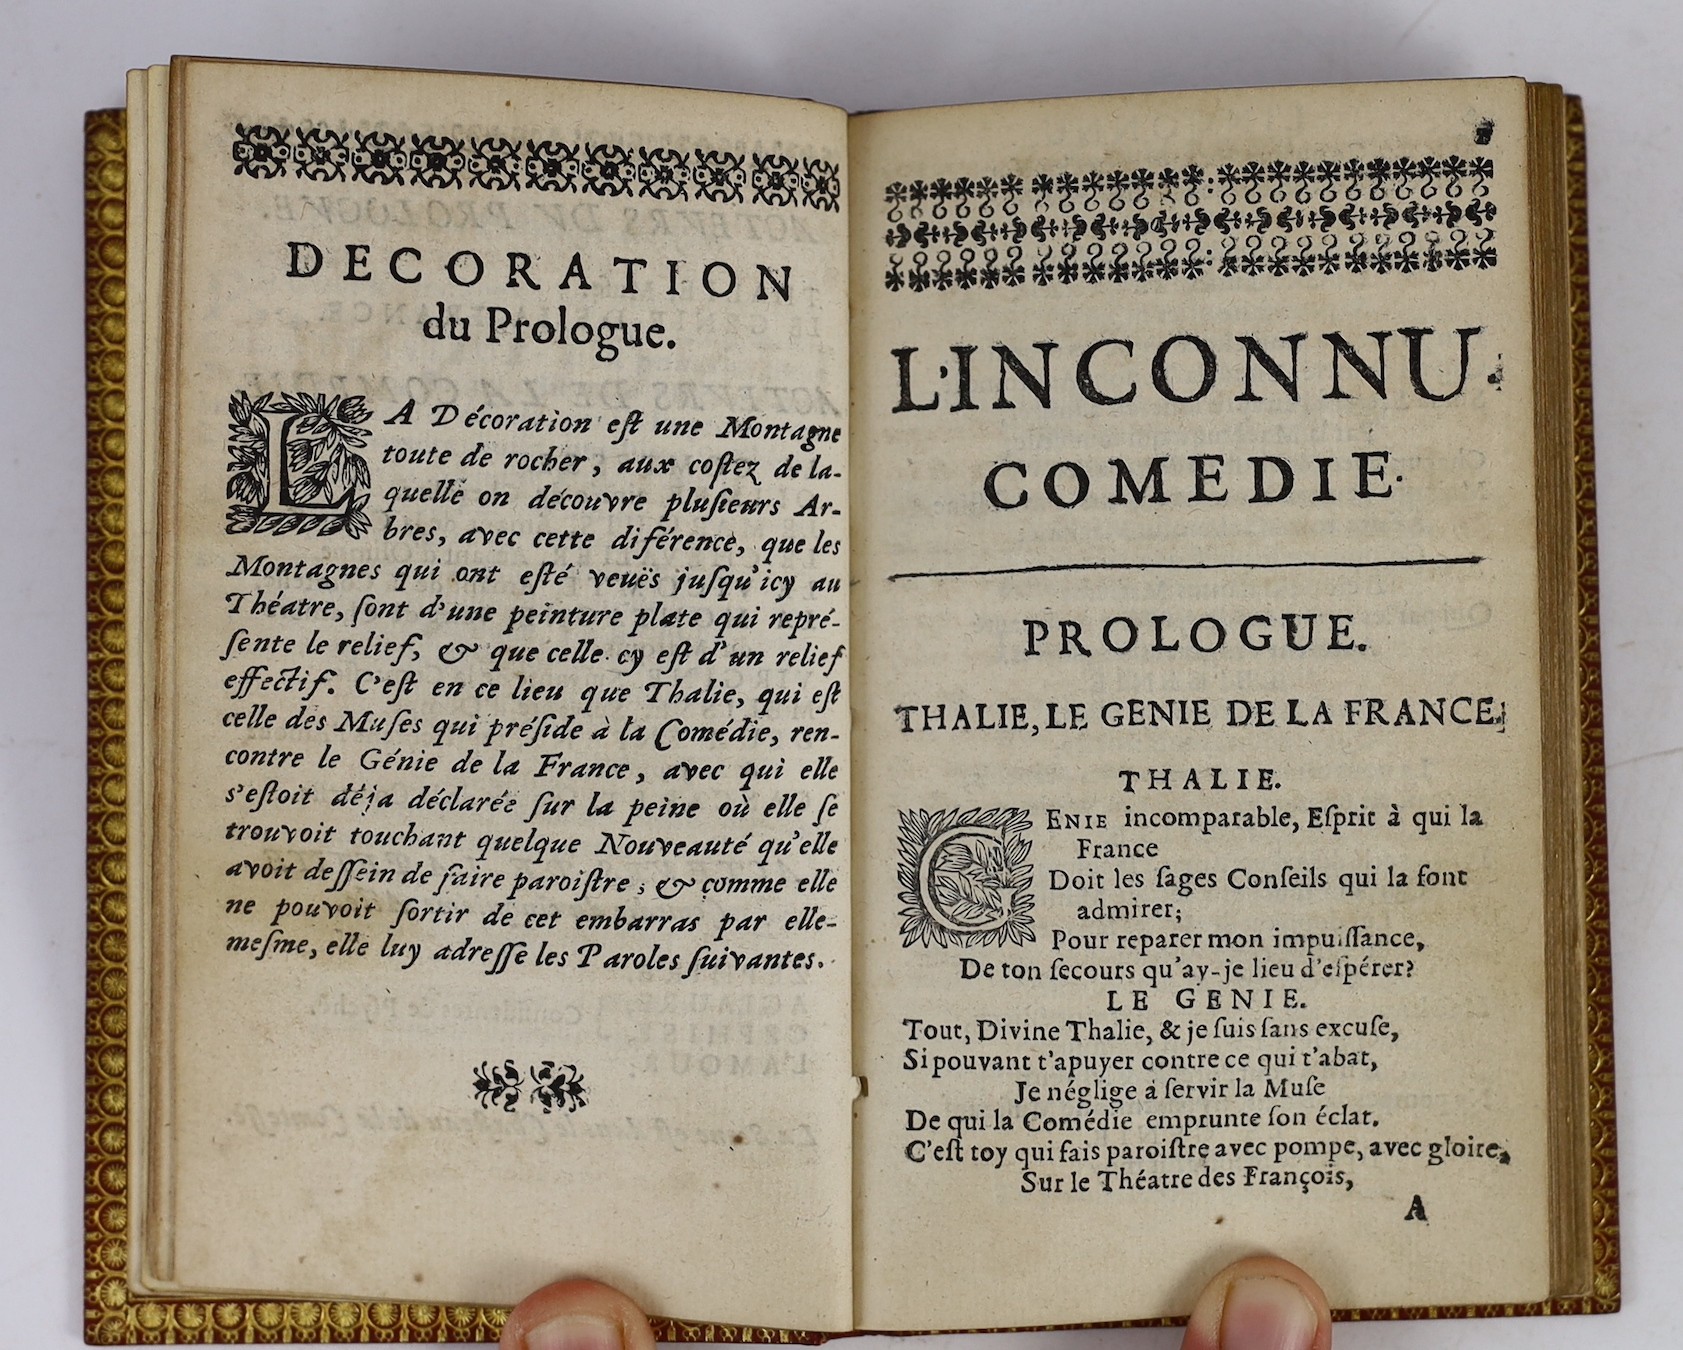 Cornielle, Thomas - L’Inconnu: comedie meslee d’ornemens et de musique, 12mo, red morocco, probably by Belz-Niedree, includes rare final leaf pp 113-114, Jean Ribou, Paris, 1676